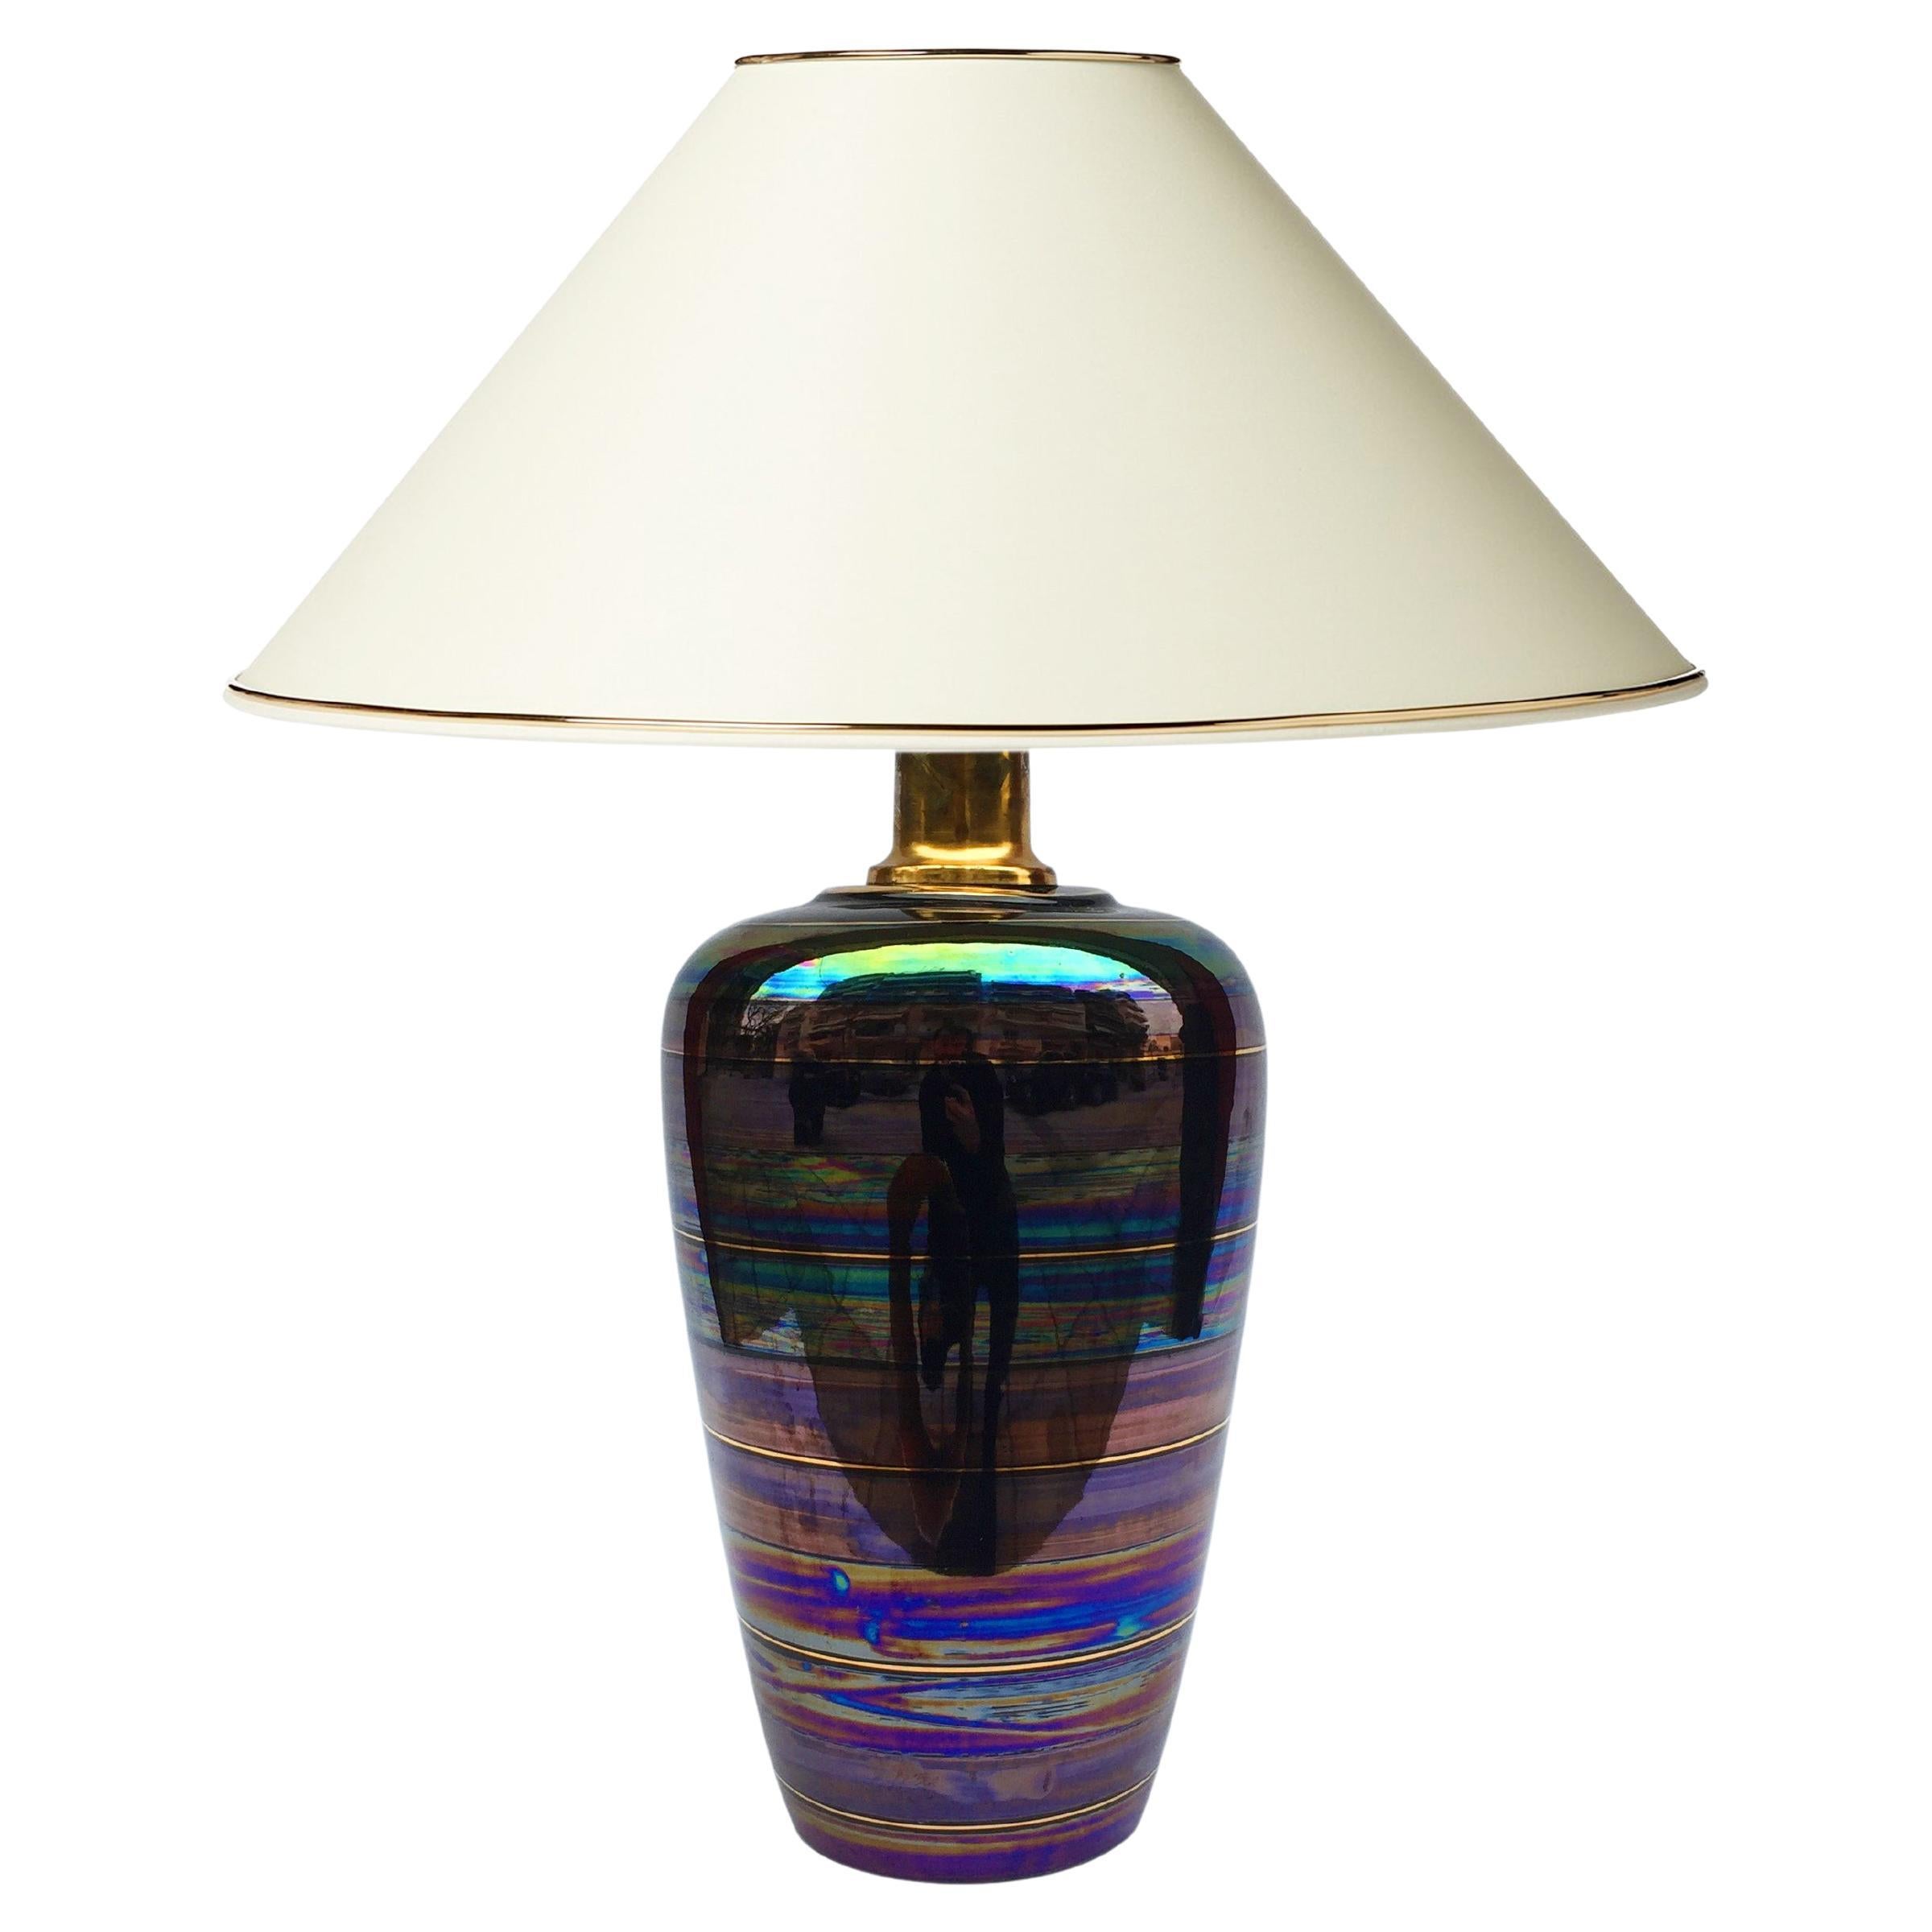 Iridescent Ceramic Table Lamp 1970s Art Nouveau Style Manner of Johann Loetz